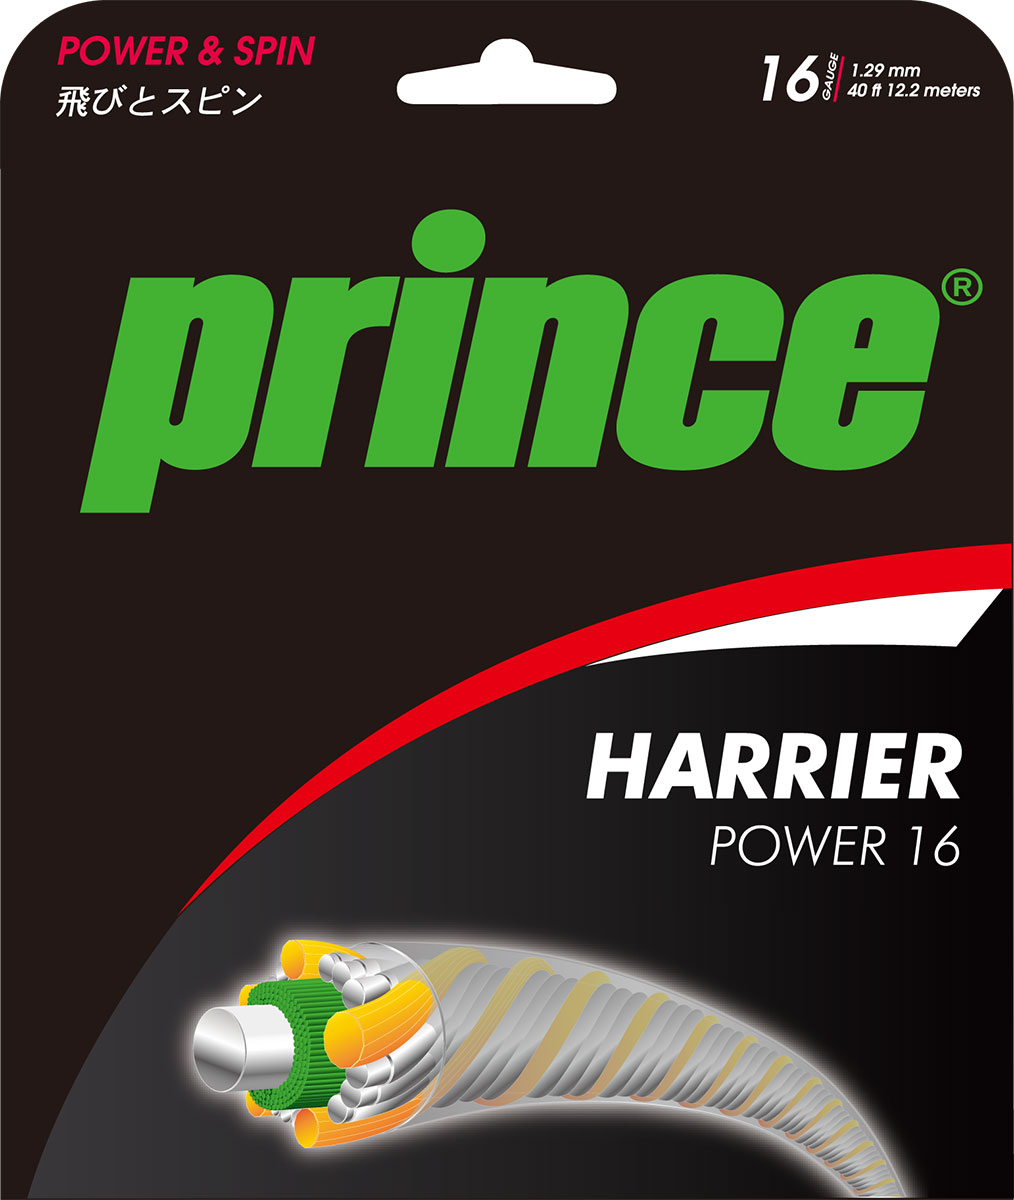 HARRIER POWER 16 - Prince プリンステニス公式サイト